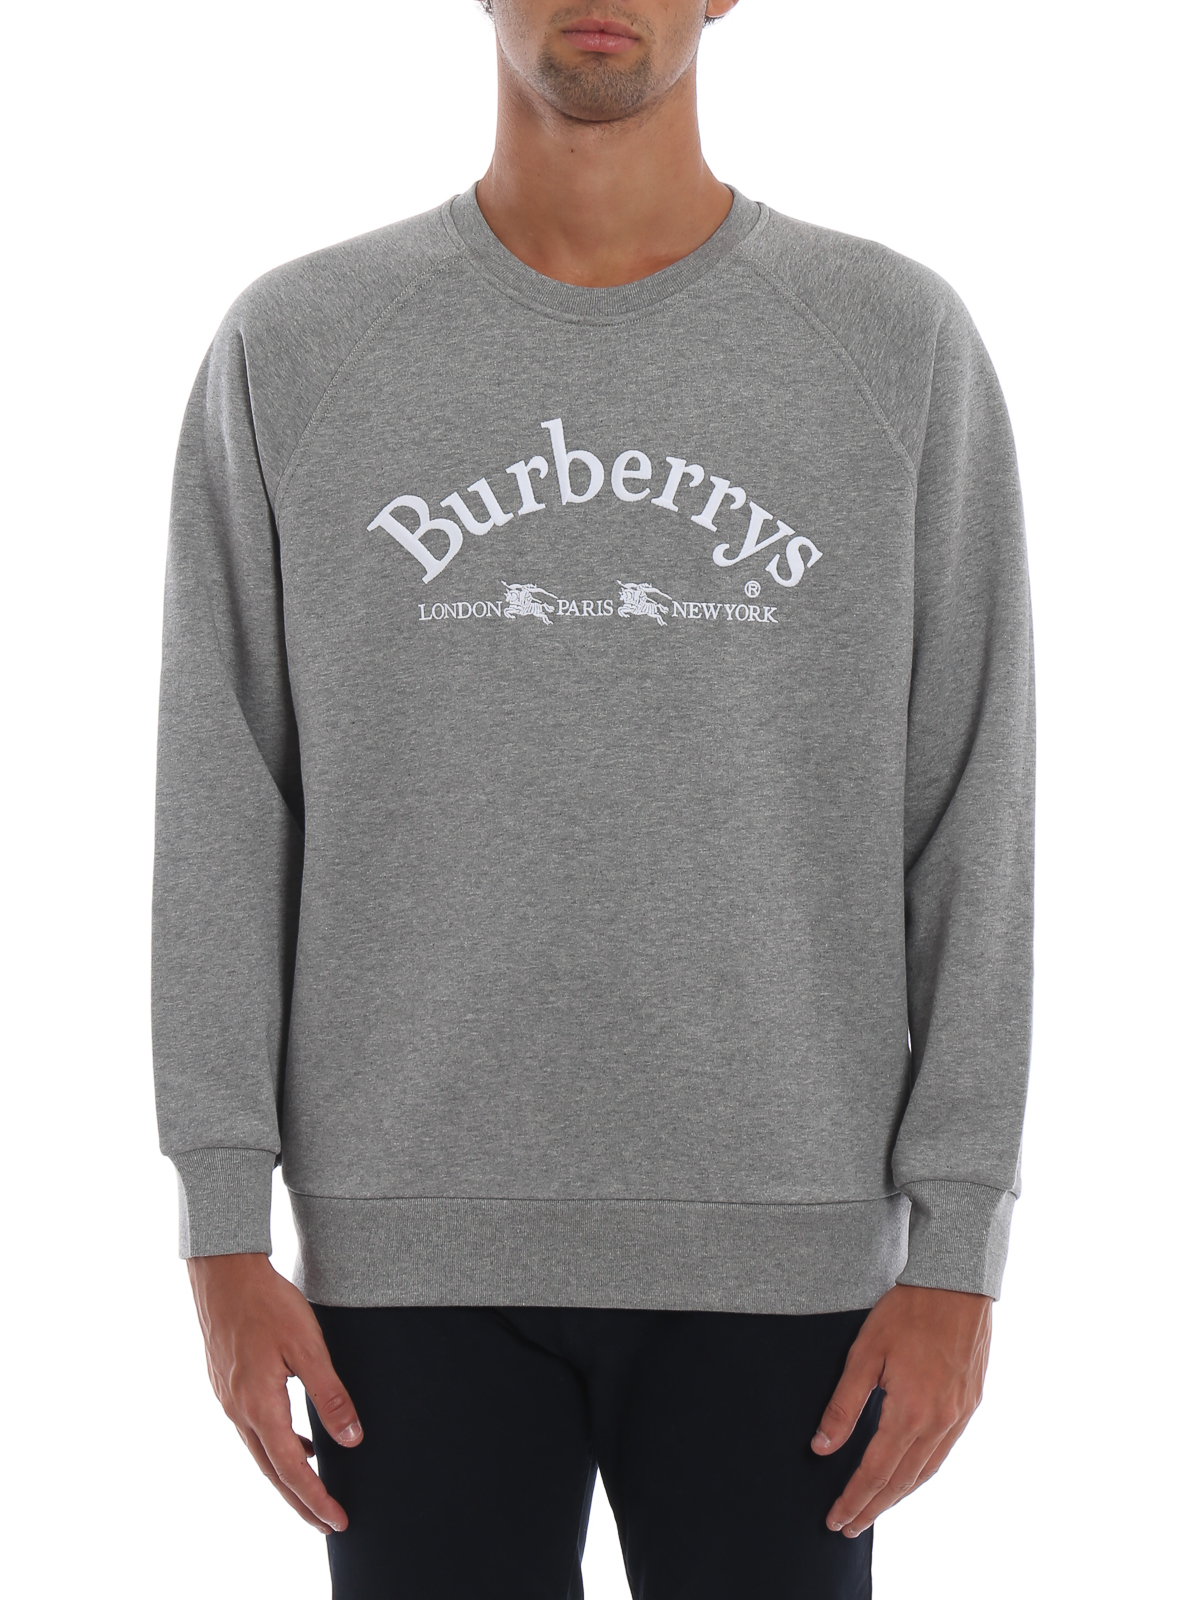 burberrys sweatshirt